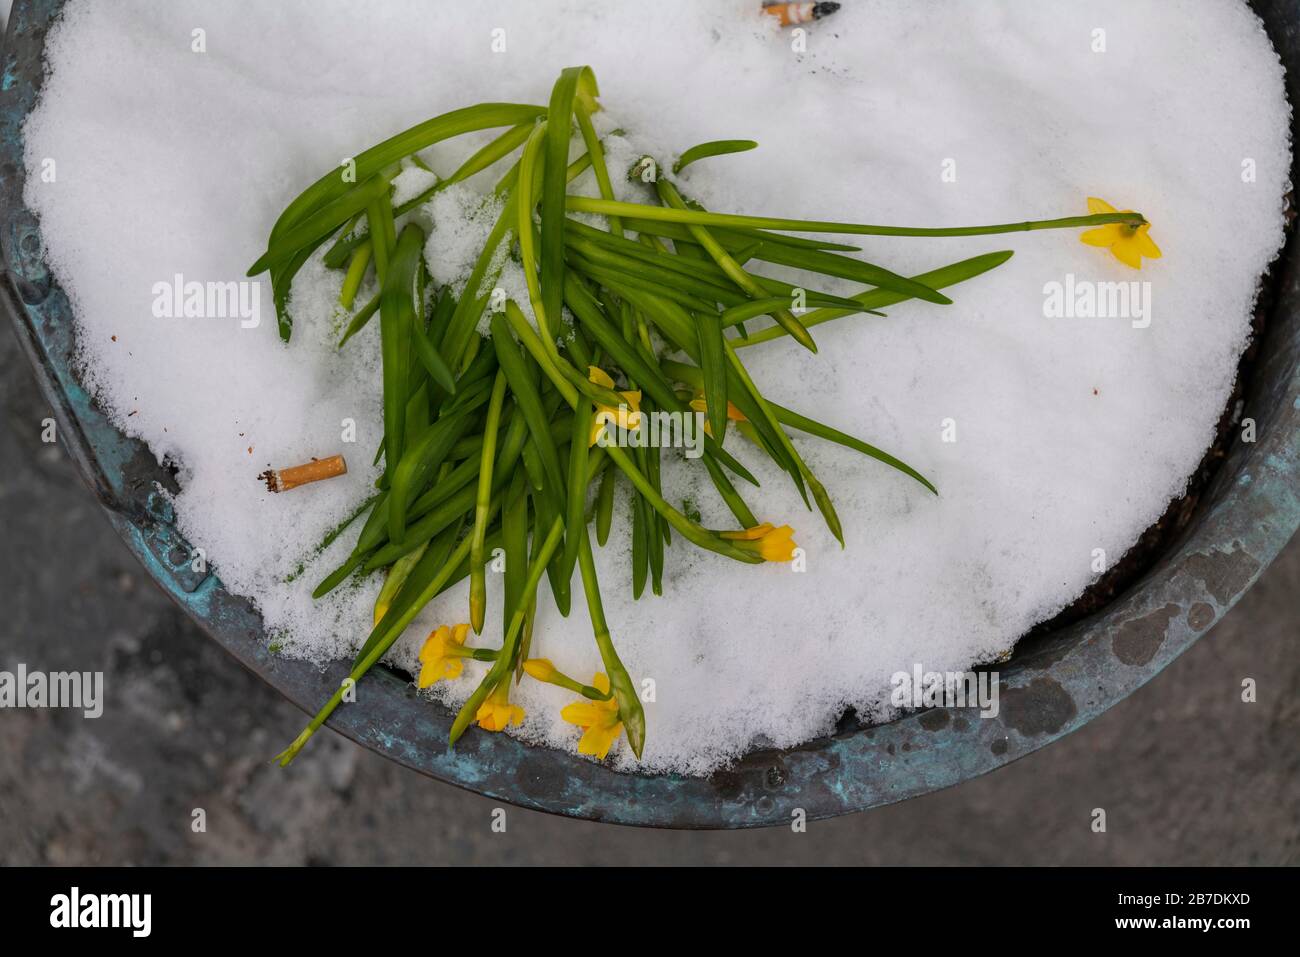 Narcisi di nana superati dalla neve e fumatori, Trondheim, Norvegia. Foto Stock